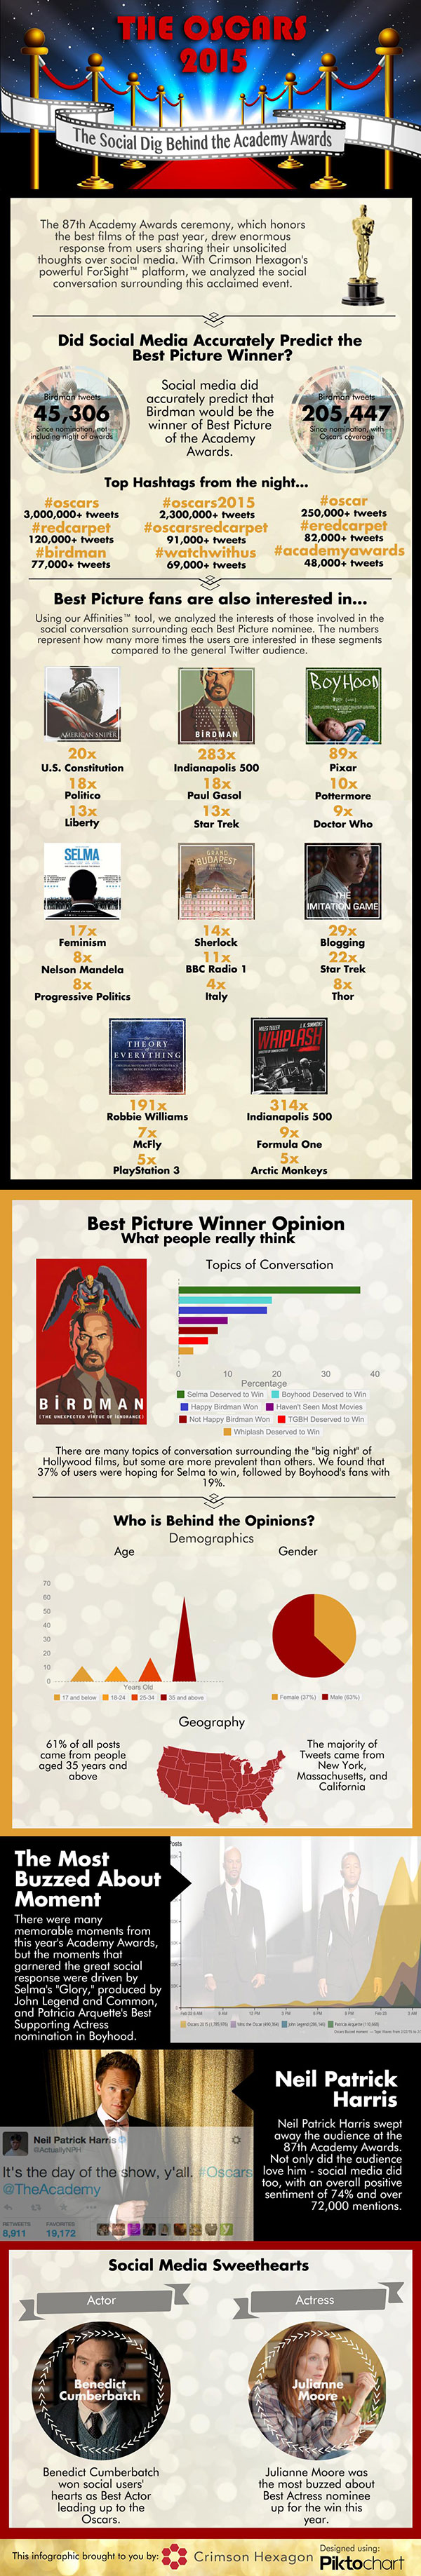 Analytics na onda social do Oscar